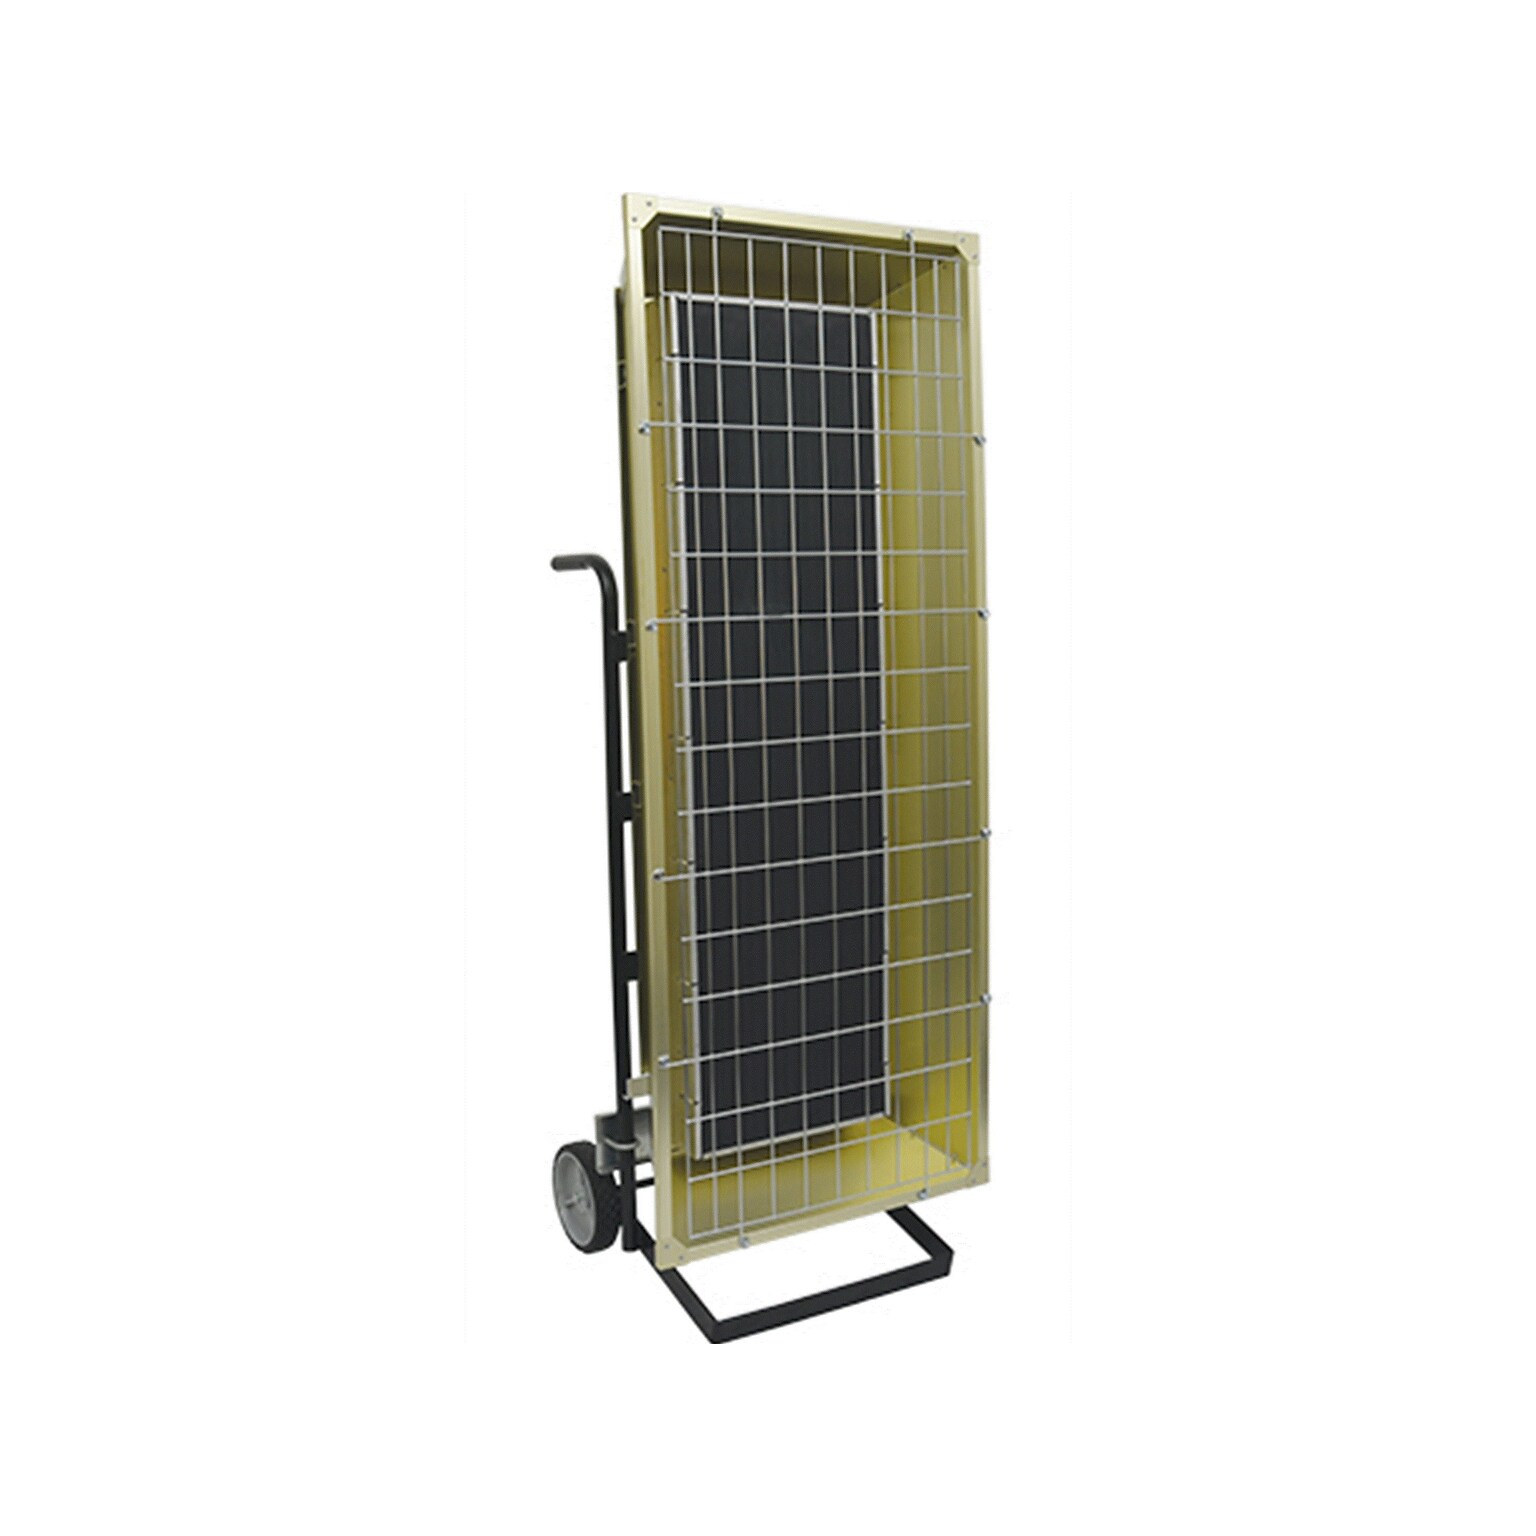 TPI Corporation Fostoria FSP 9500-Watt 32414 BTU Portable Indoor/Outdoor Infrared Electric Heater, Gold (04885202)